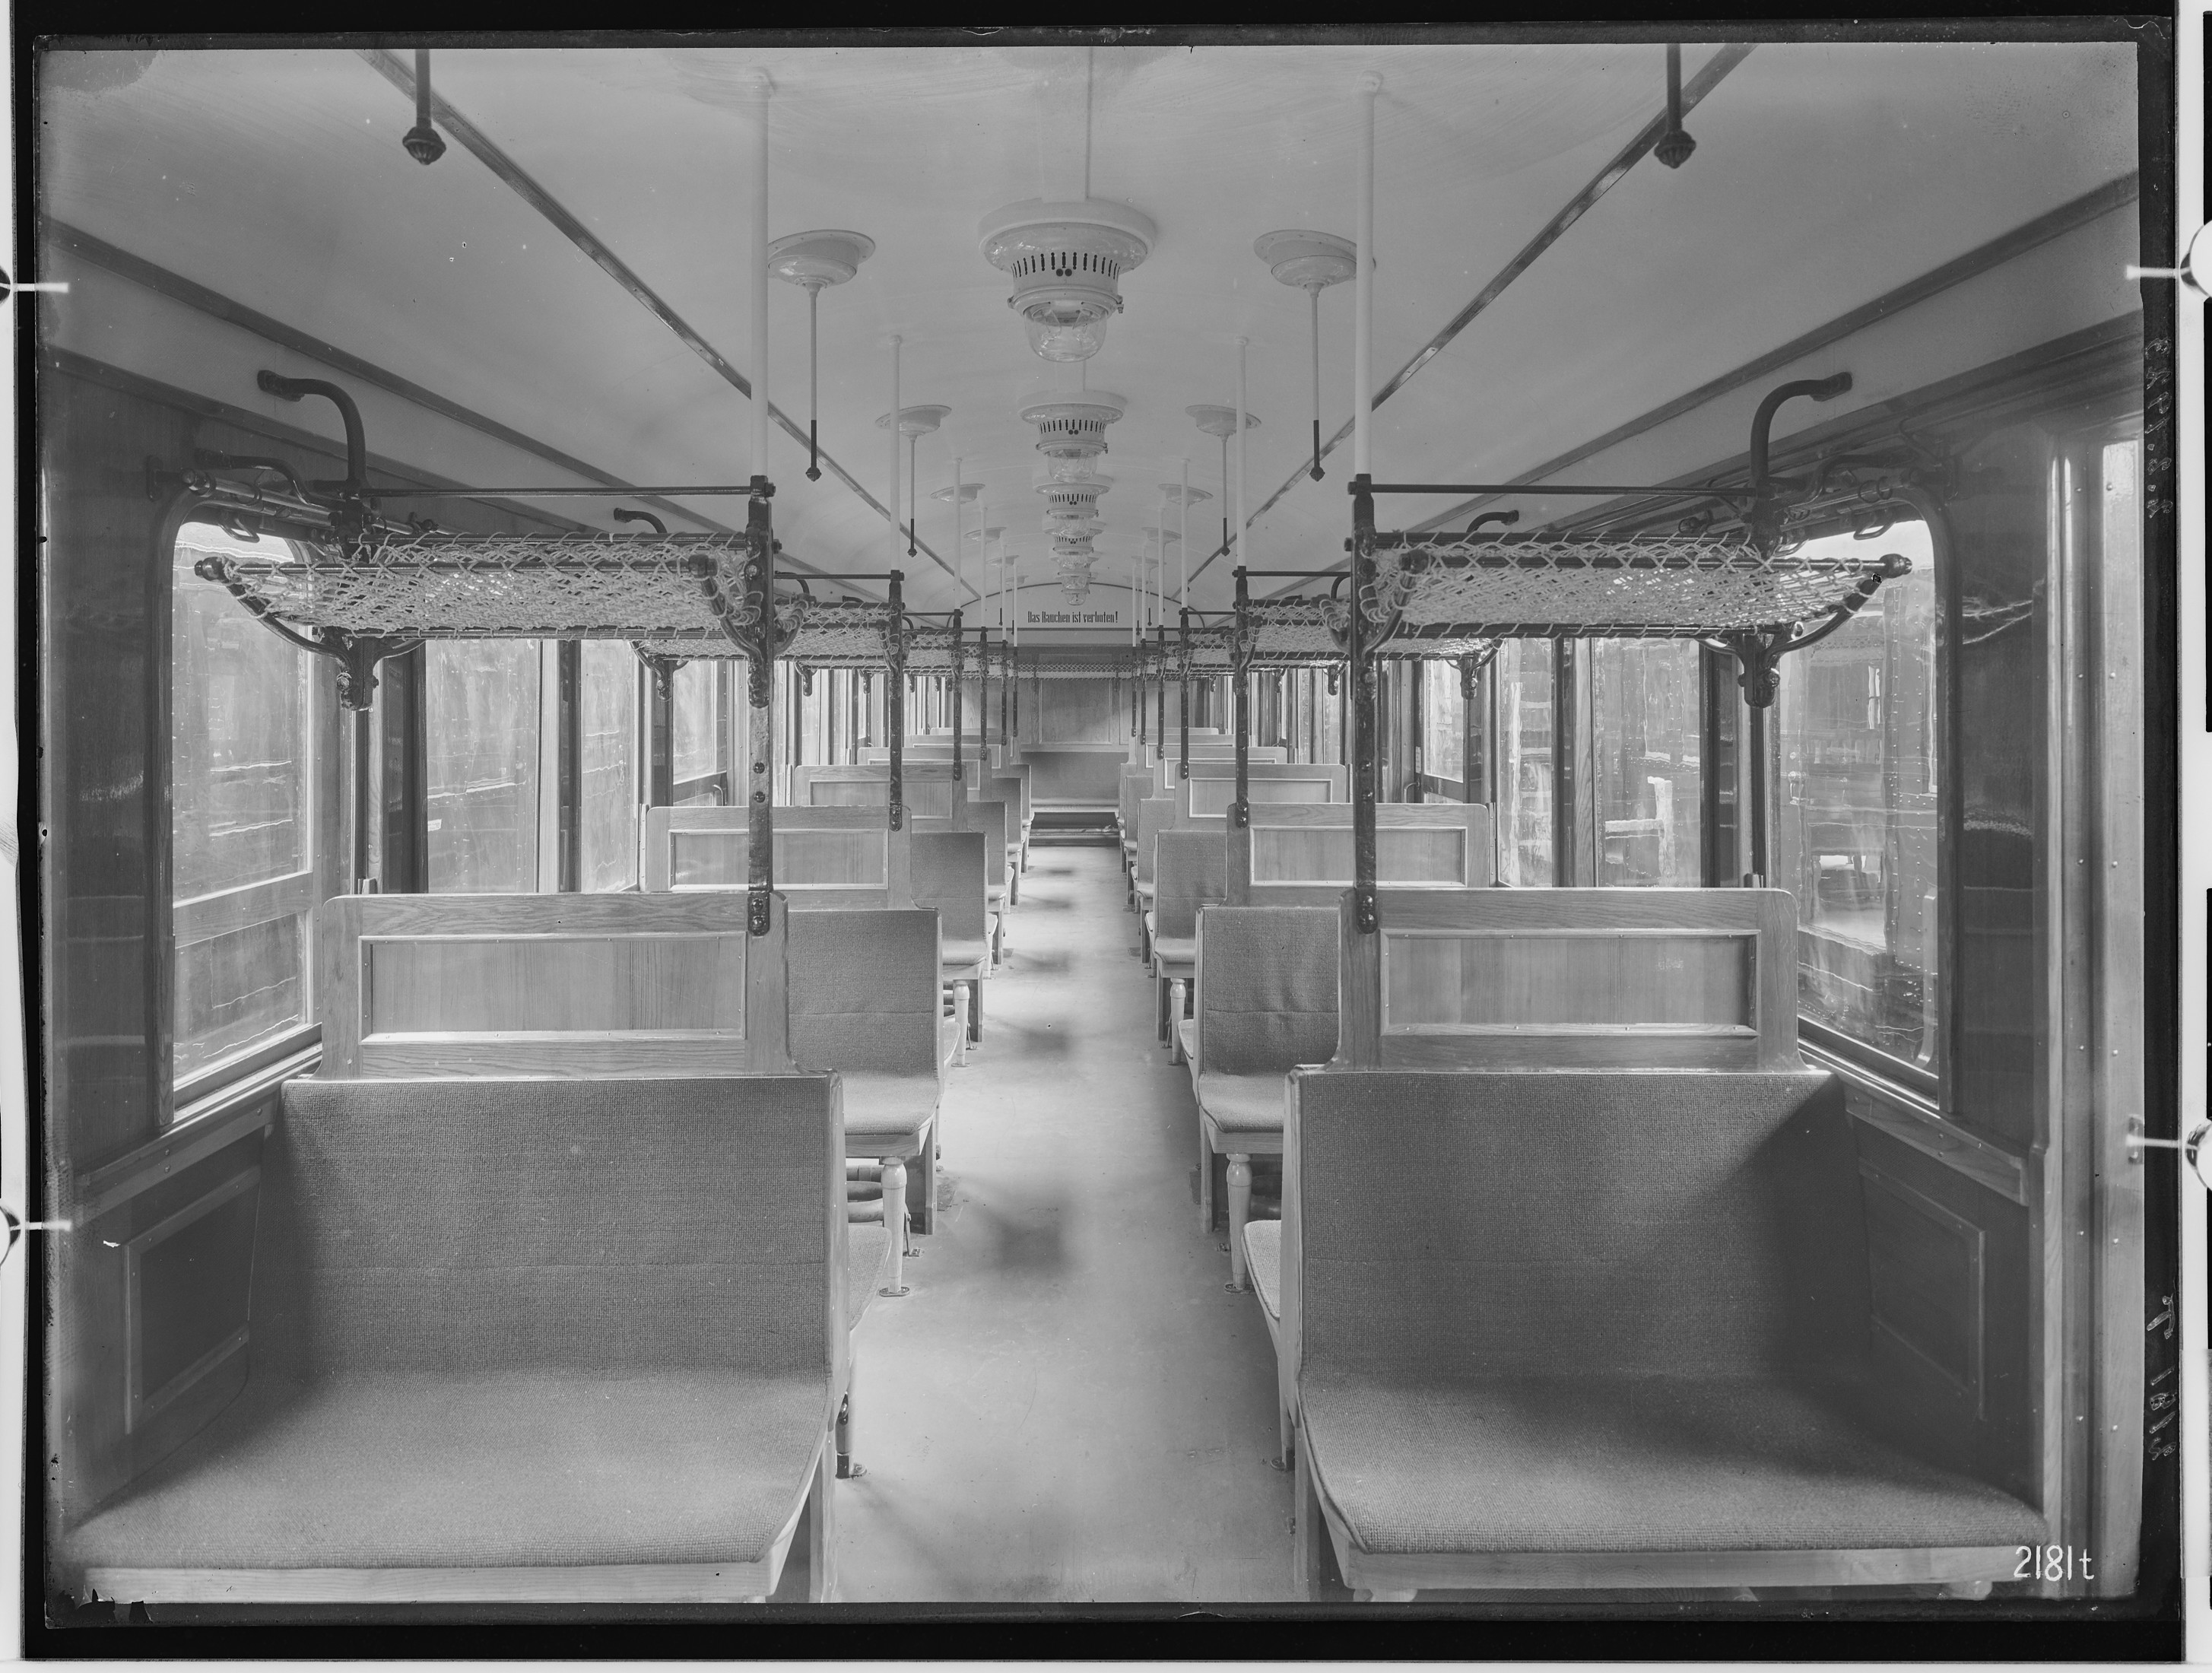 Fotografie: vierachsiger Triebwagen A-Zug (Mittelgang II), 1922 (Schenkung der Bombardier Transportation, Werk Görlitz | Eigentum/Sammlung der Verkehrsmuseums Dresden gGmbH CC BY-NC-SA)